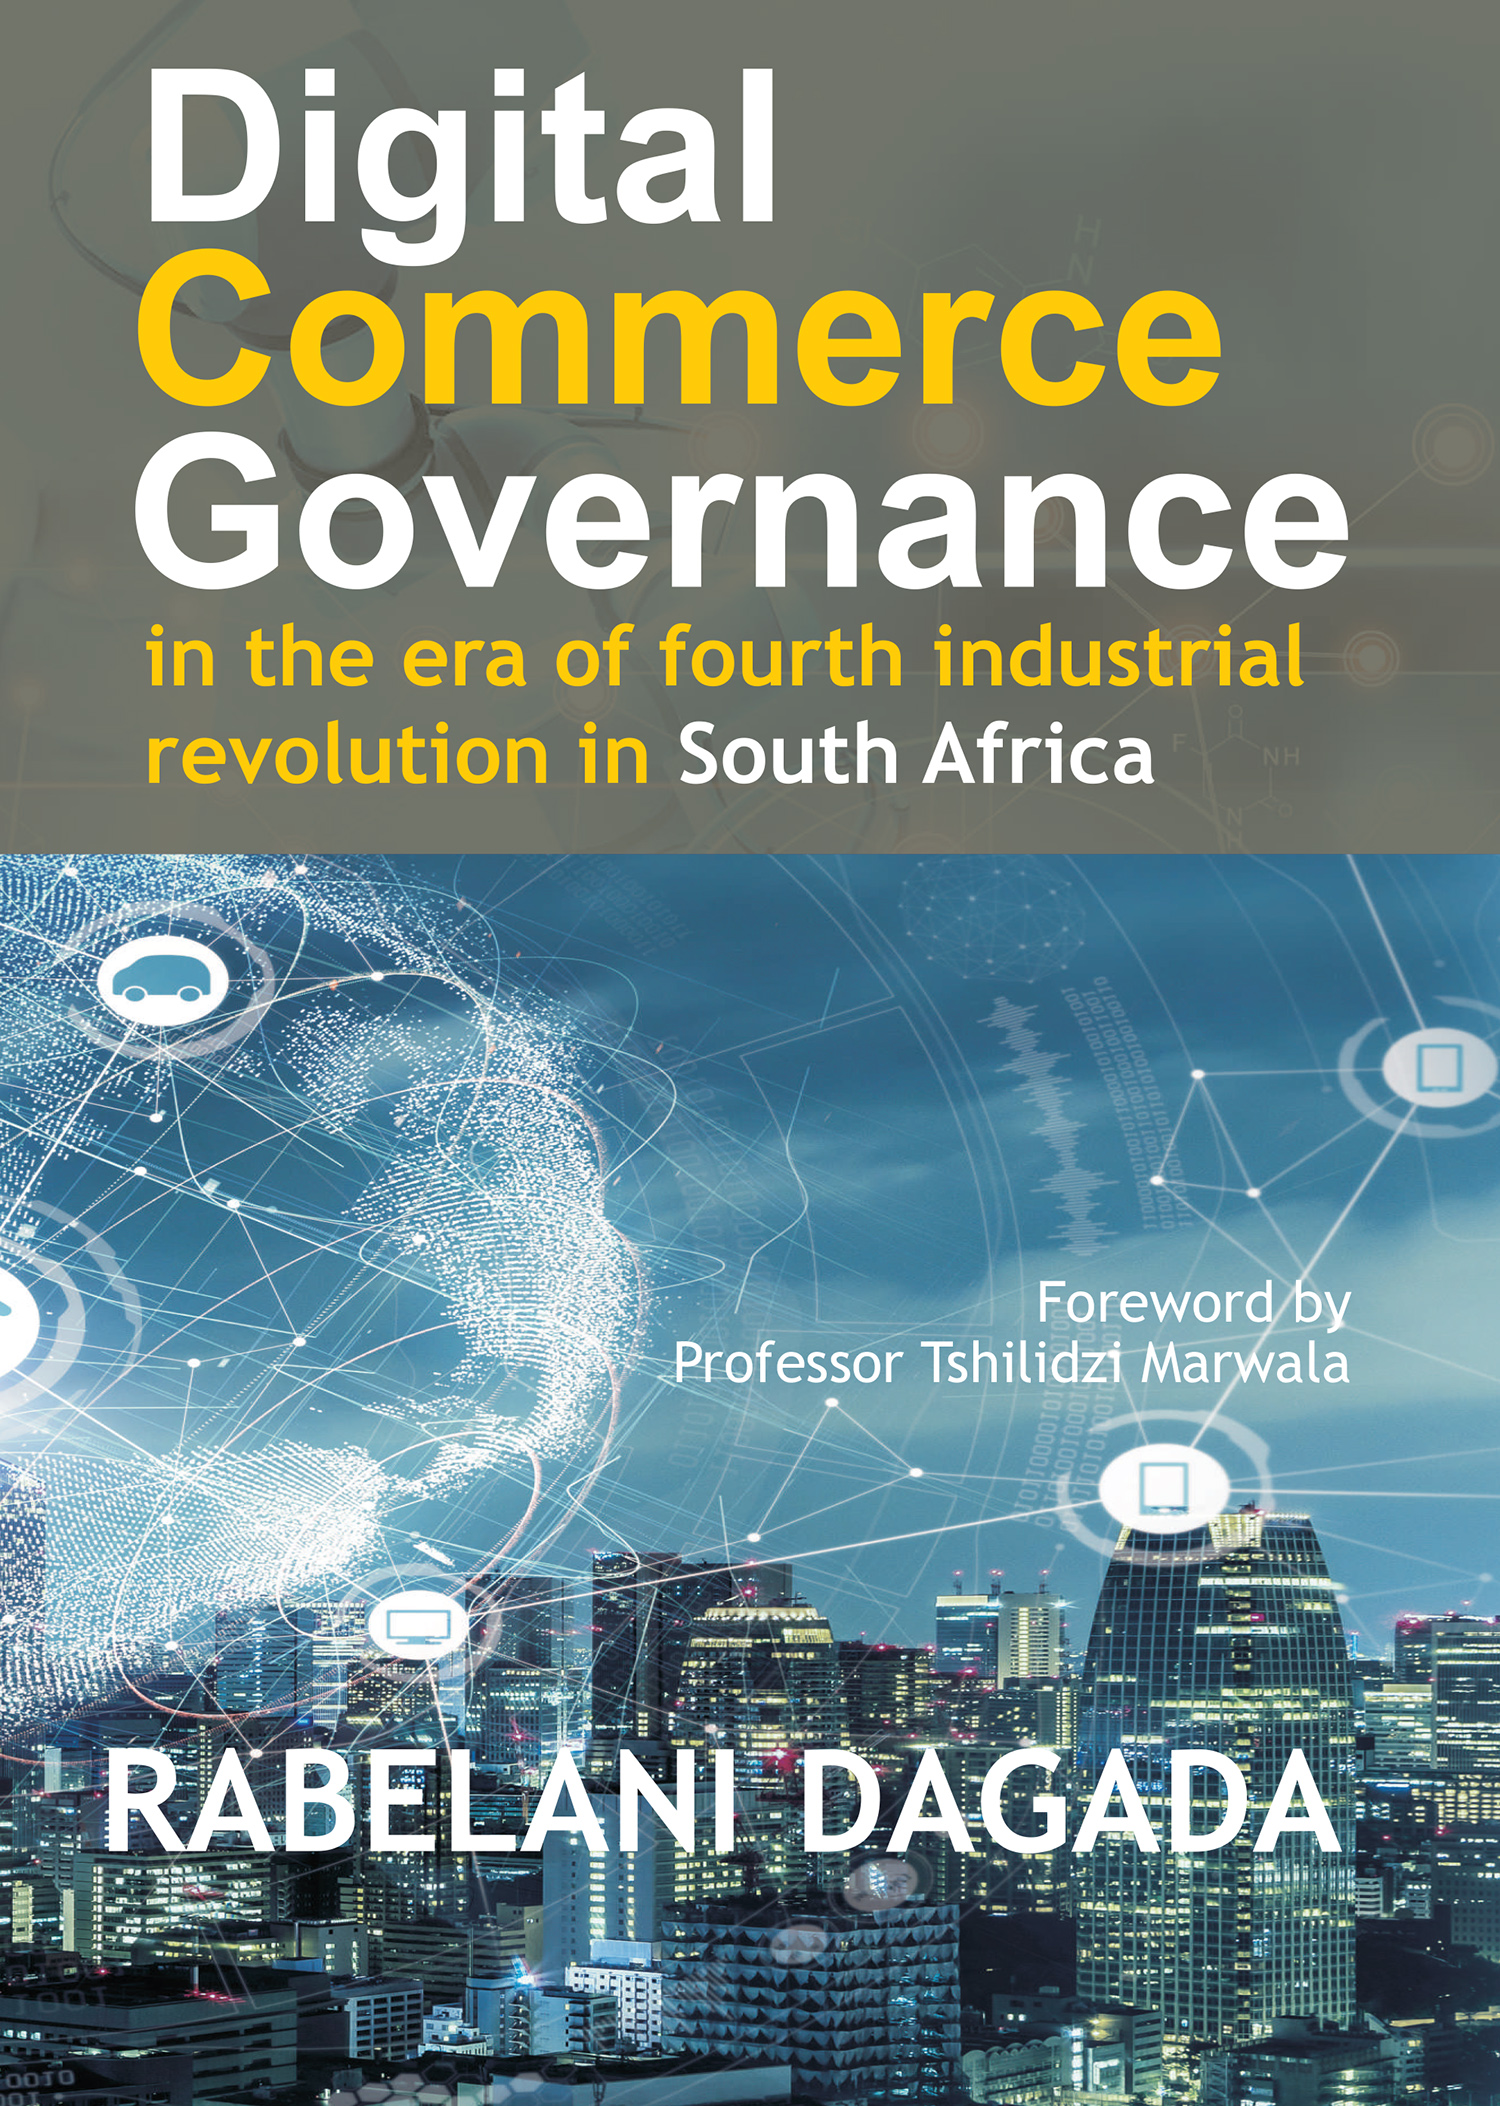 Dagada. Digital Commerce Governance cover low res.jpg